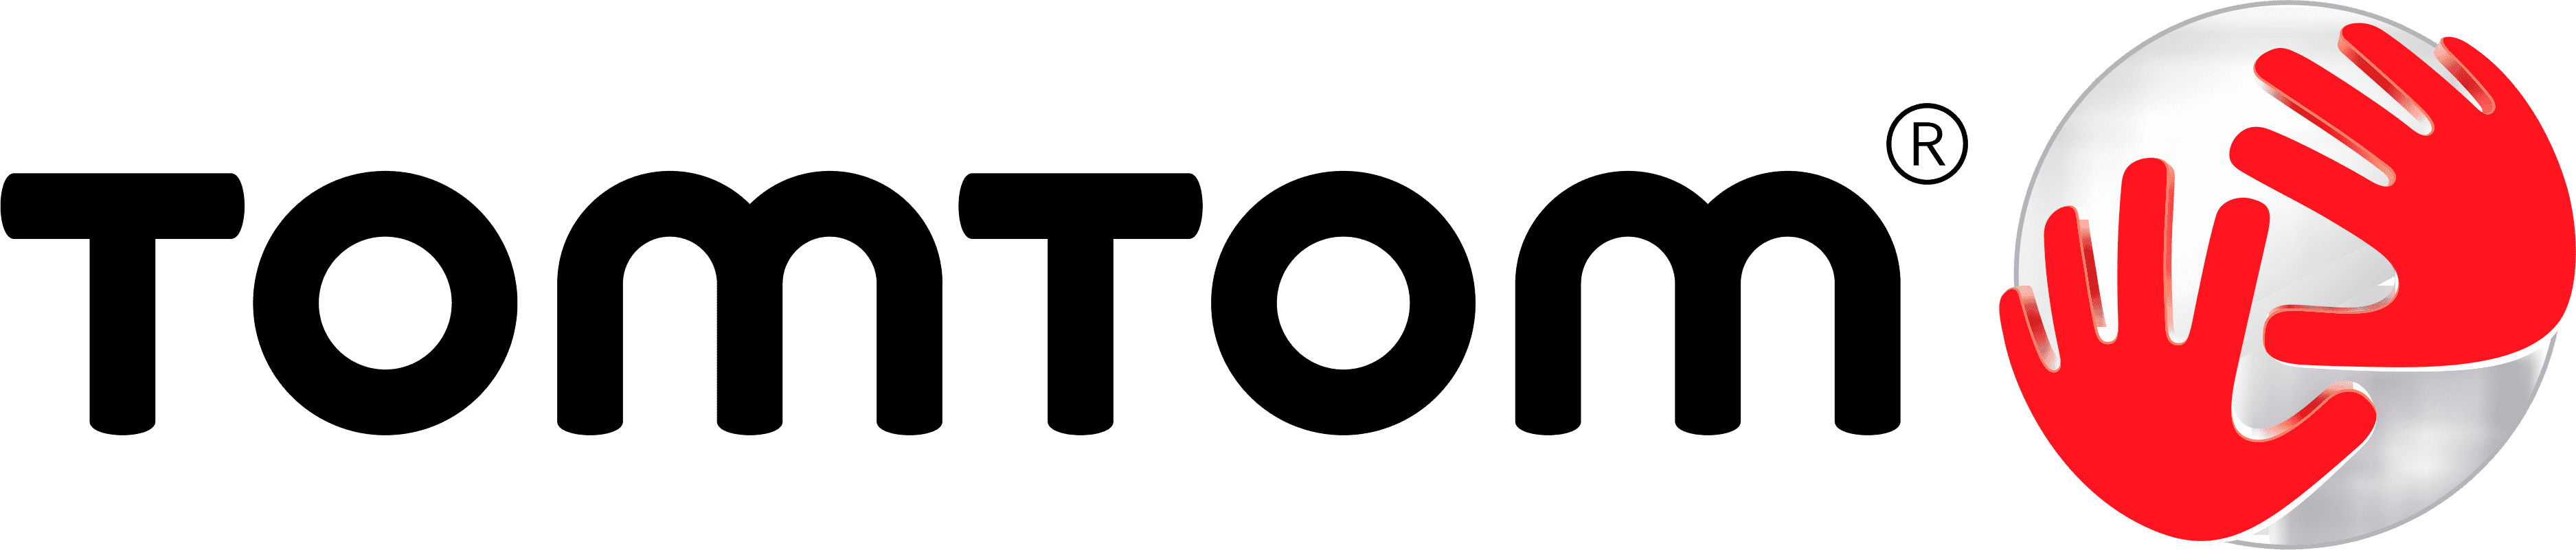 TomTom logo | TeambuildingGuide - Original ideas for a successful team building